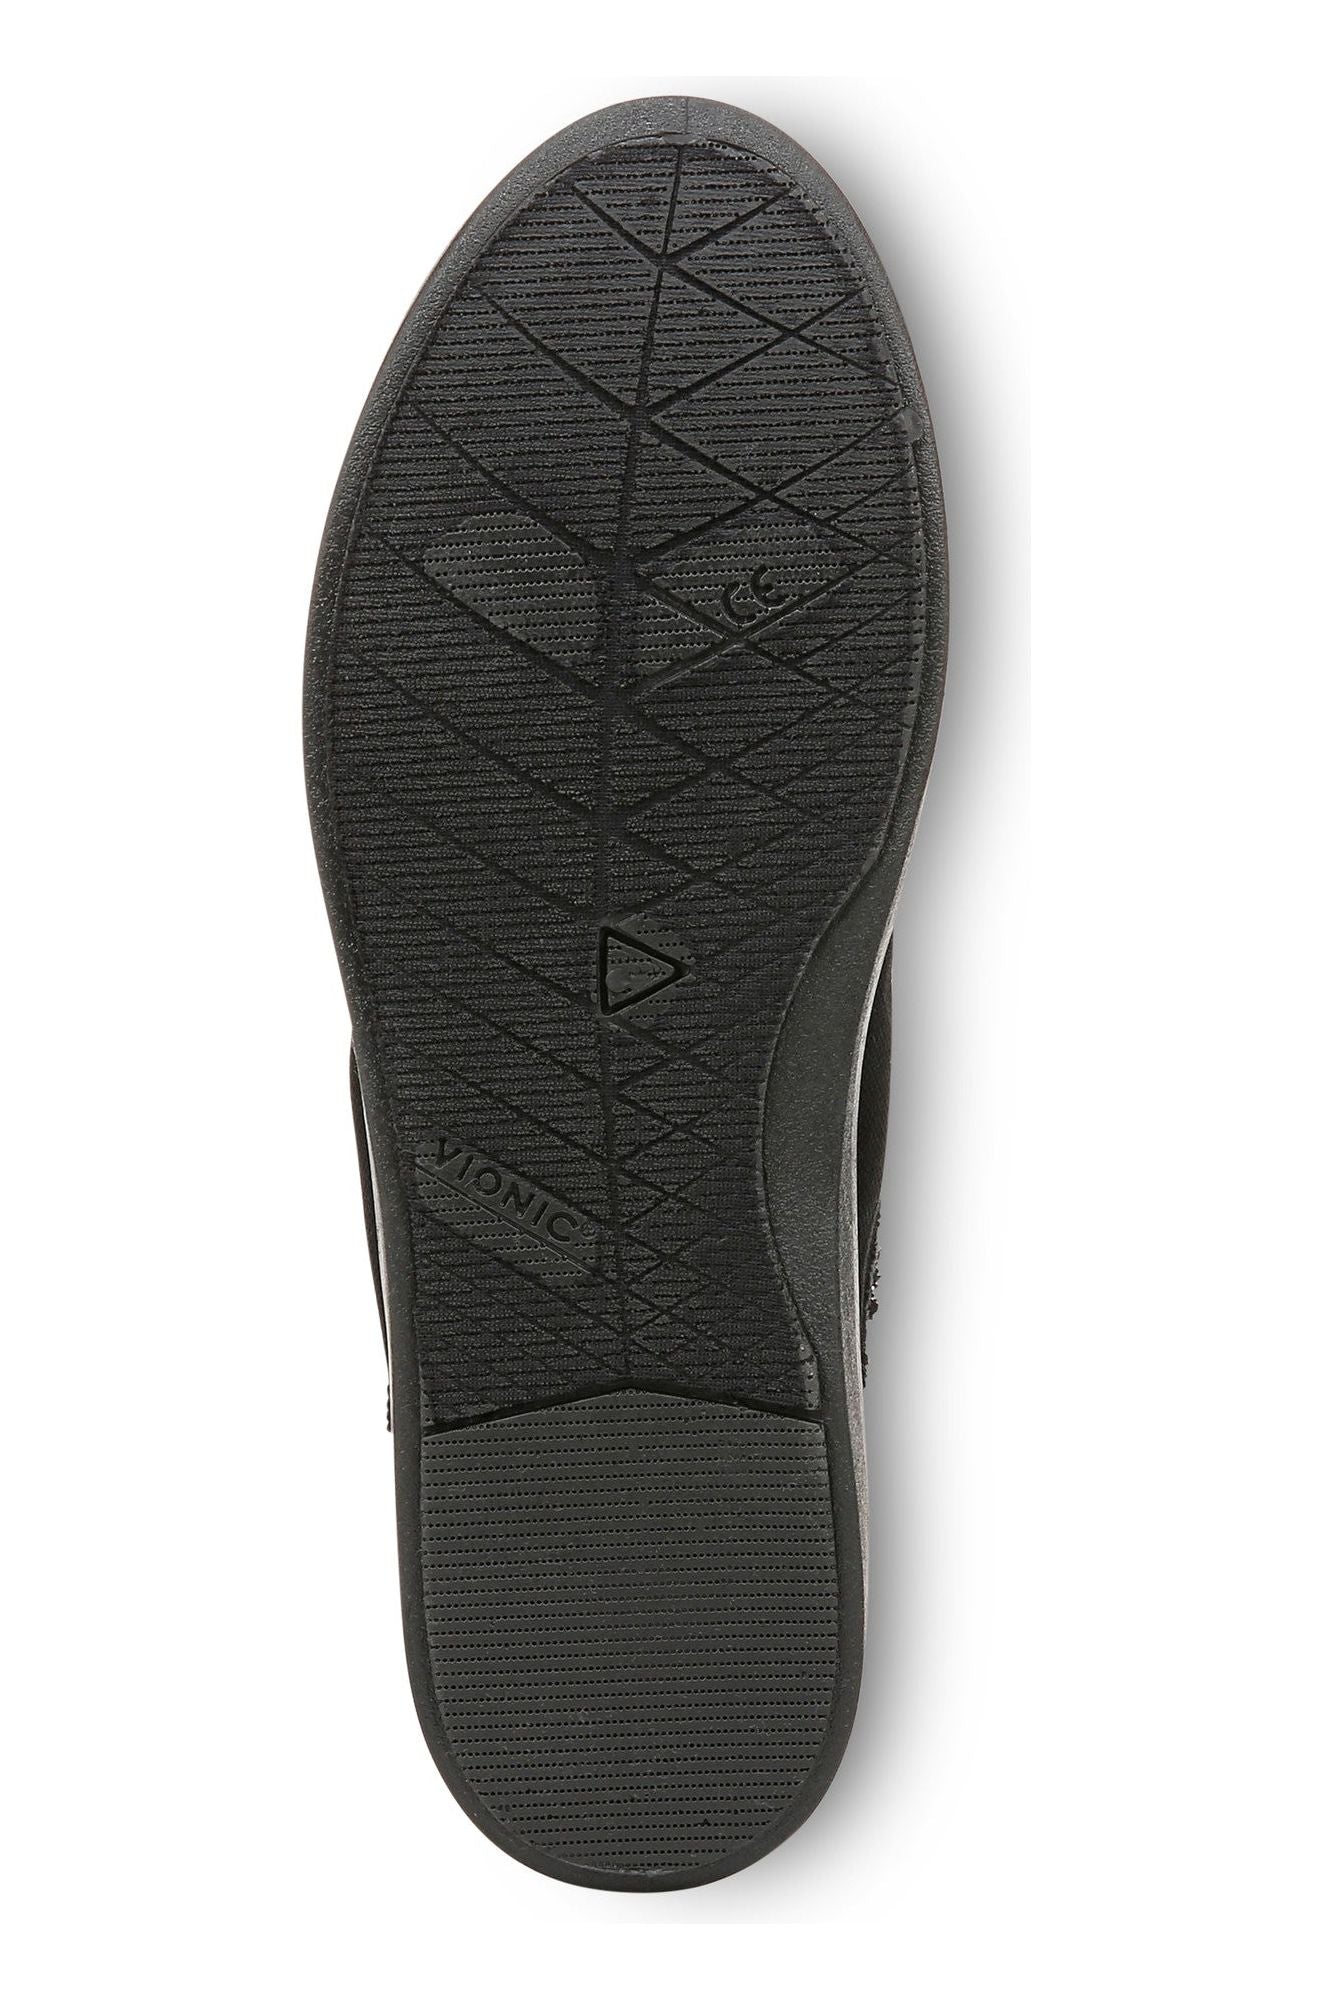 Vionic Canvas Laced Denim Sneaker - Style Pismo CNVS, black denim, bottom